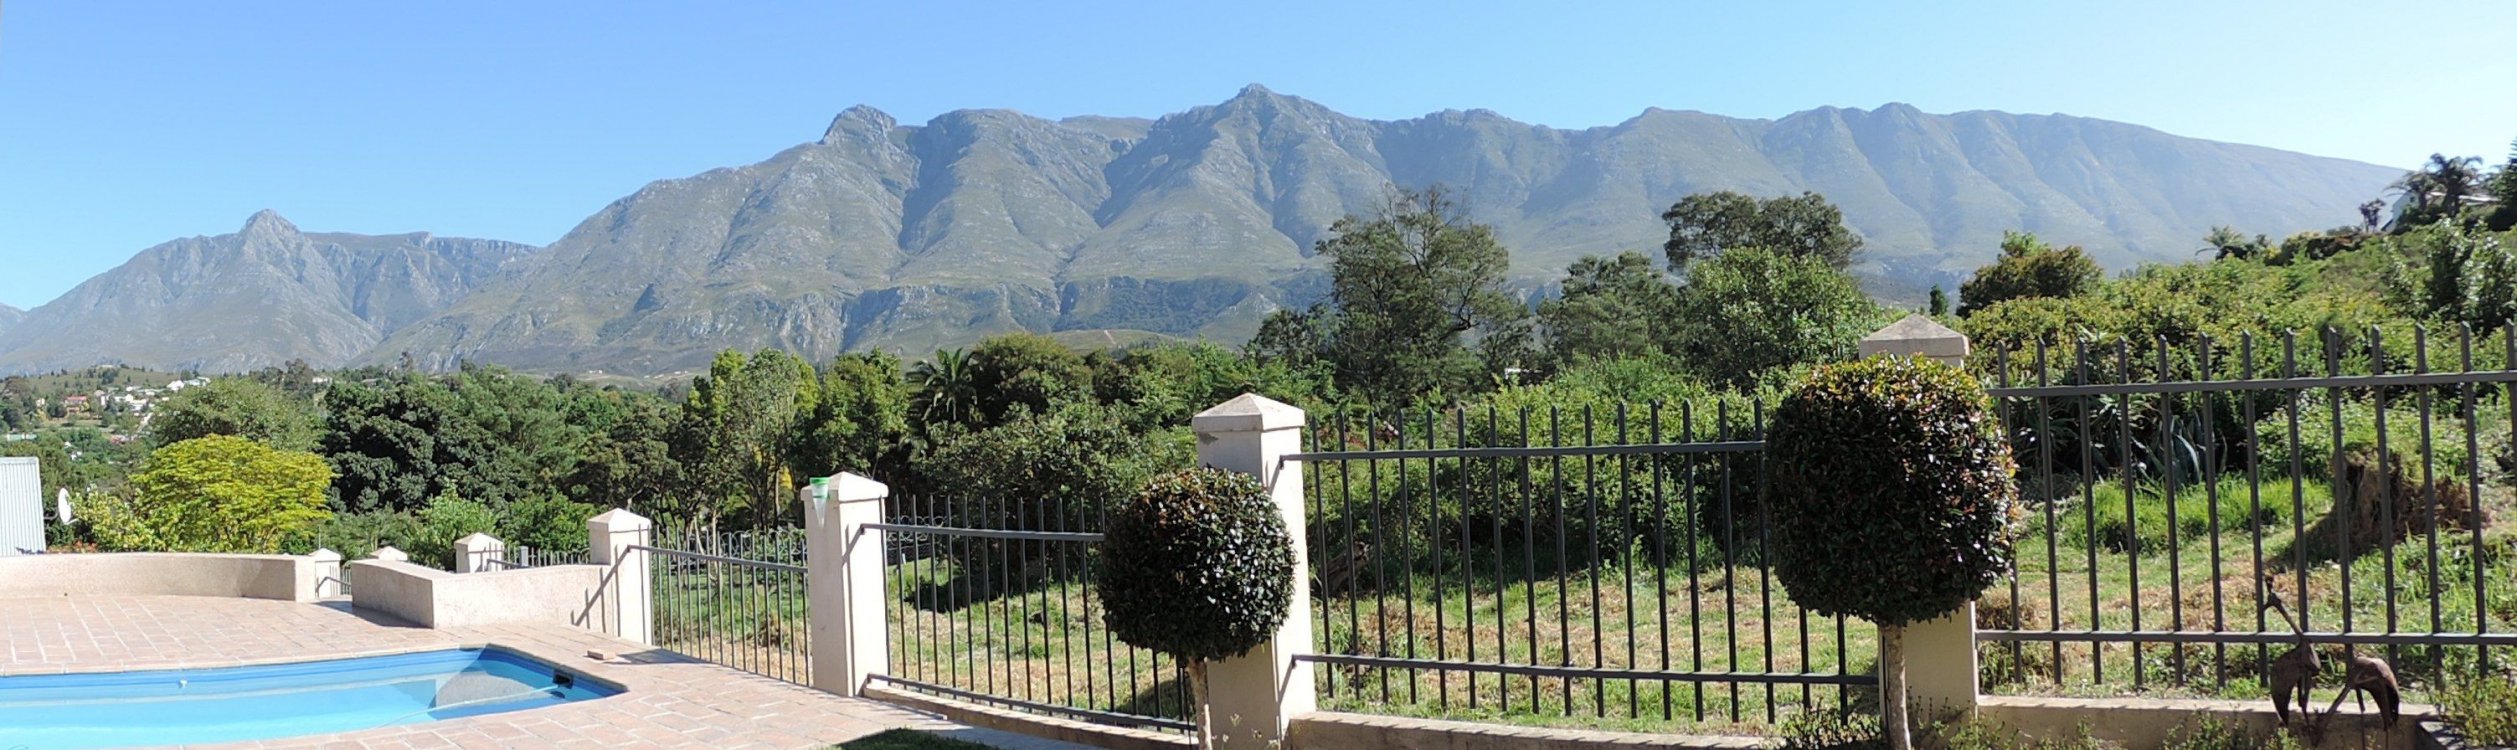 panorama fynbos.jpg